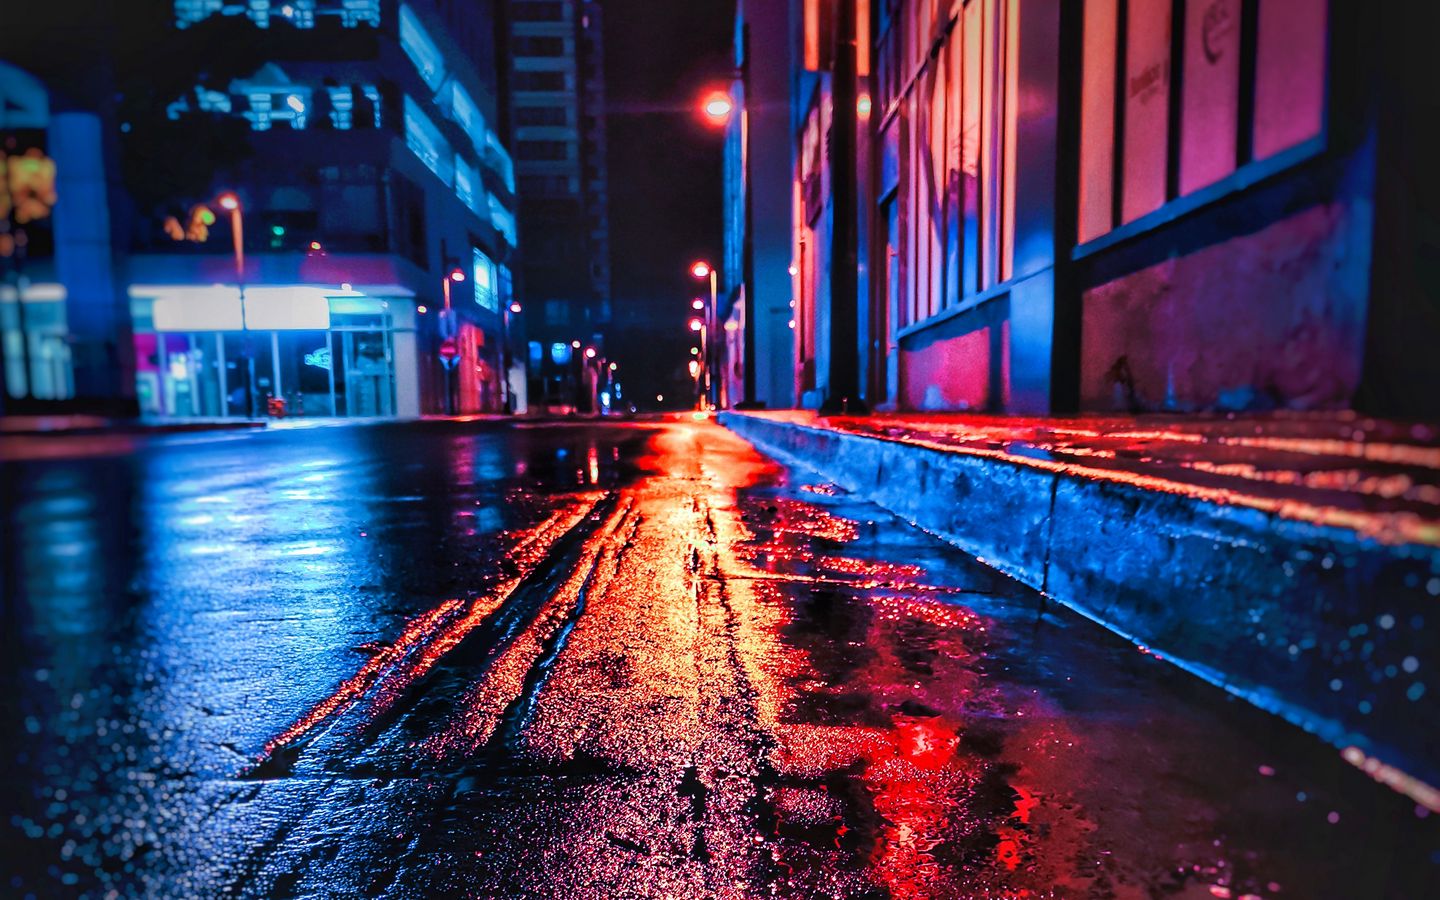 Download wallpaper 1440x900 street, night, wet, neon, city widescreen 16:10  hd background